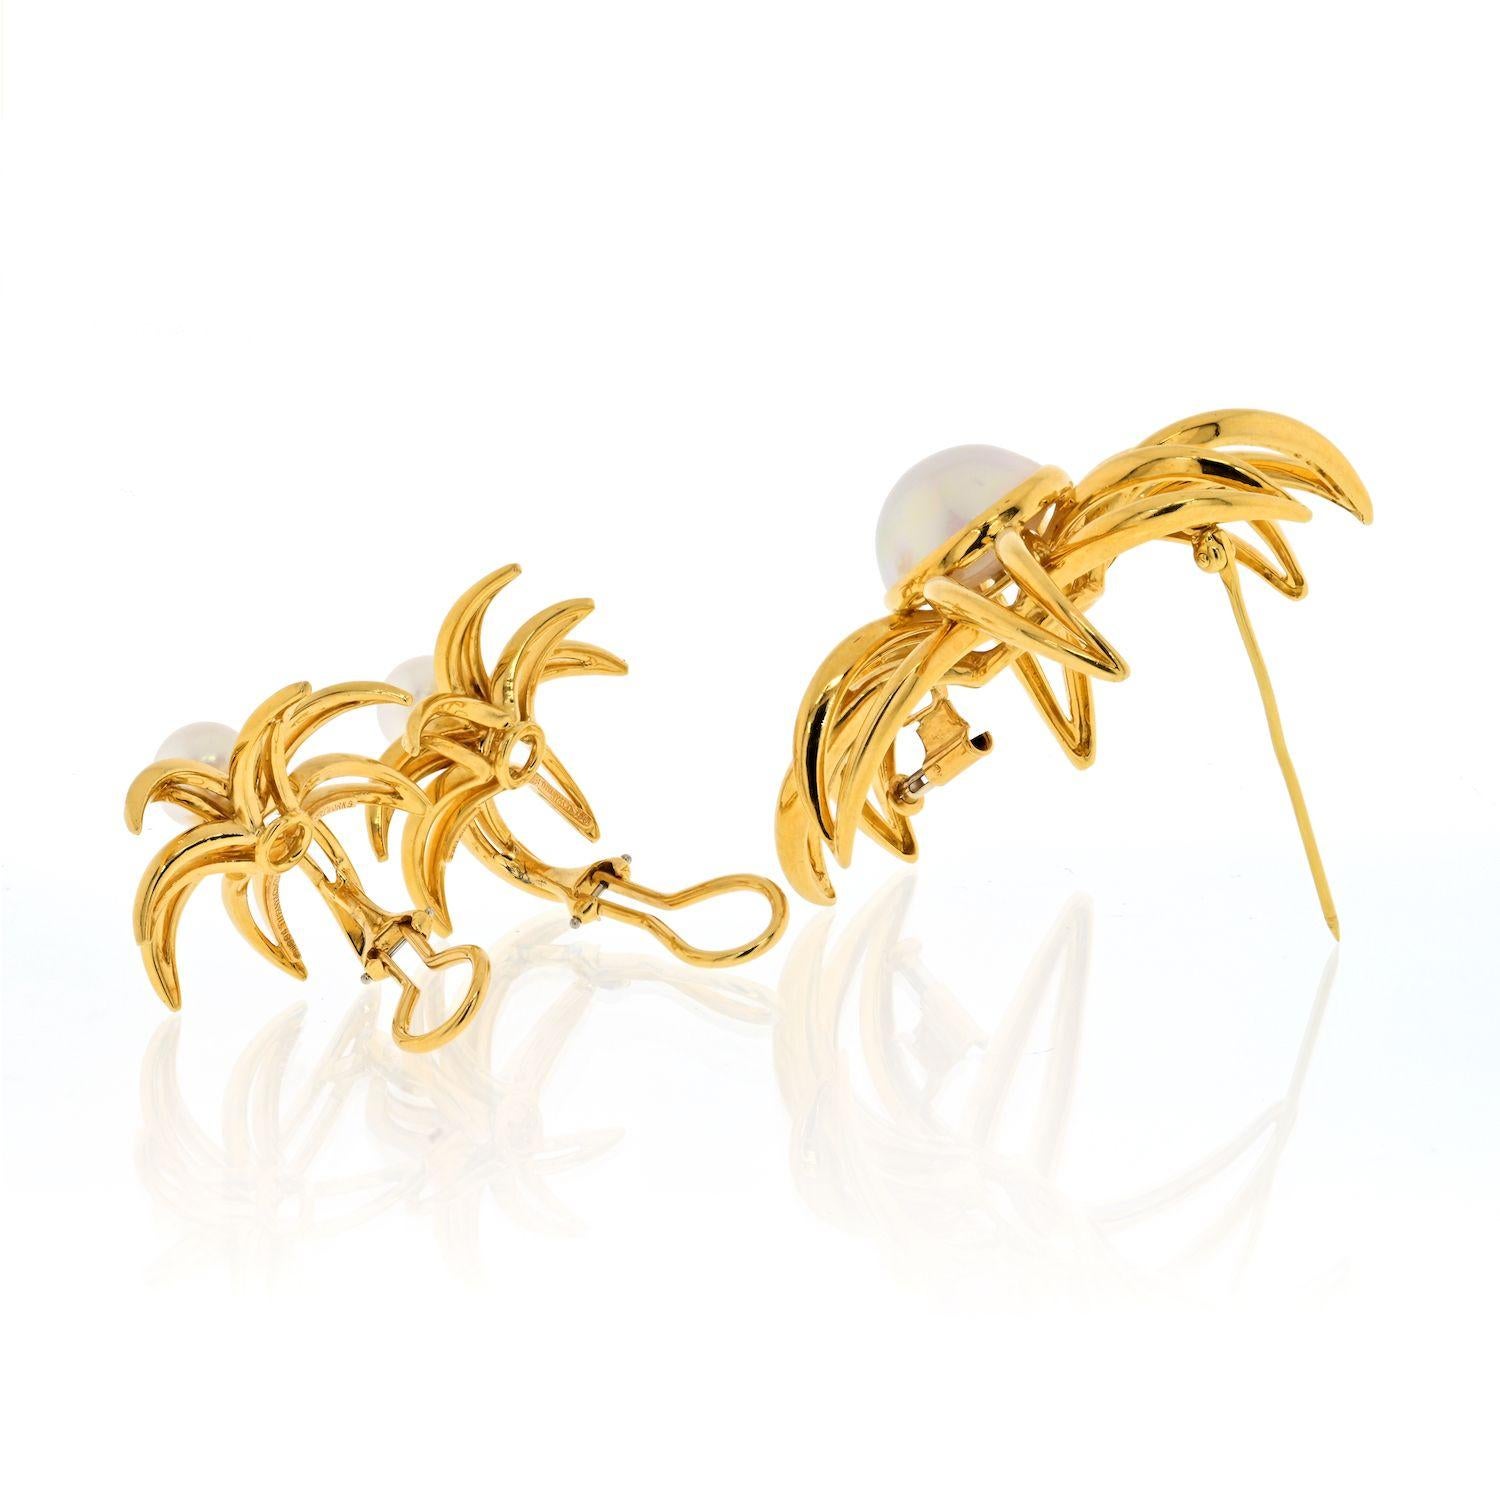 Modern Tiffany & Co. 18K Yellow Gold Brooch and Earrings Star Motif Jewelry Set